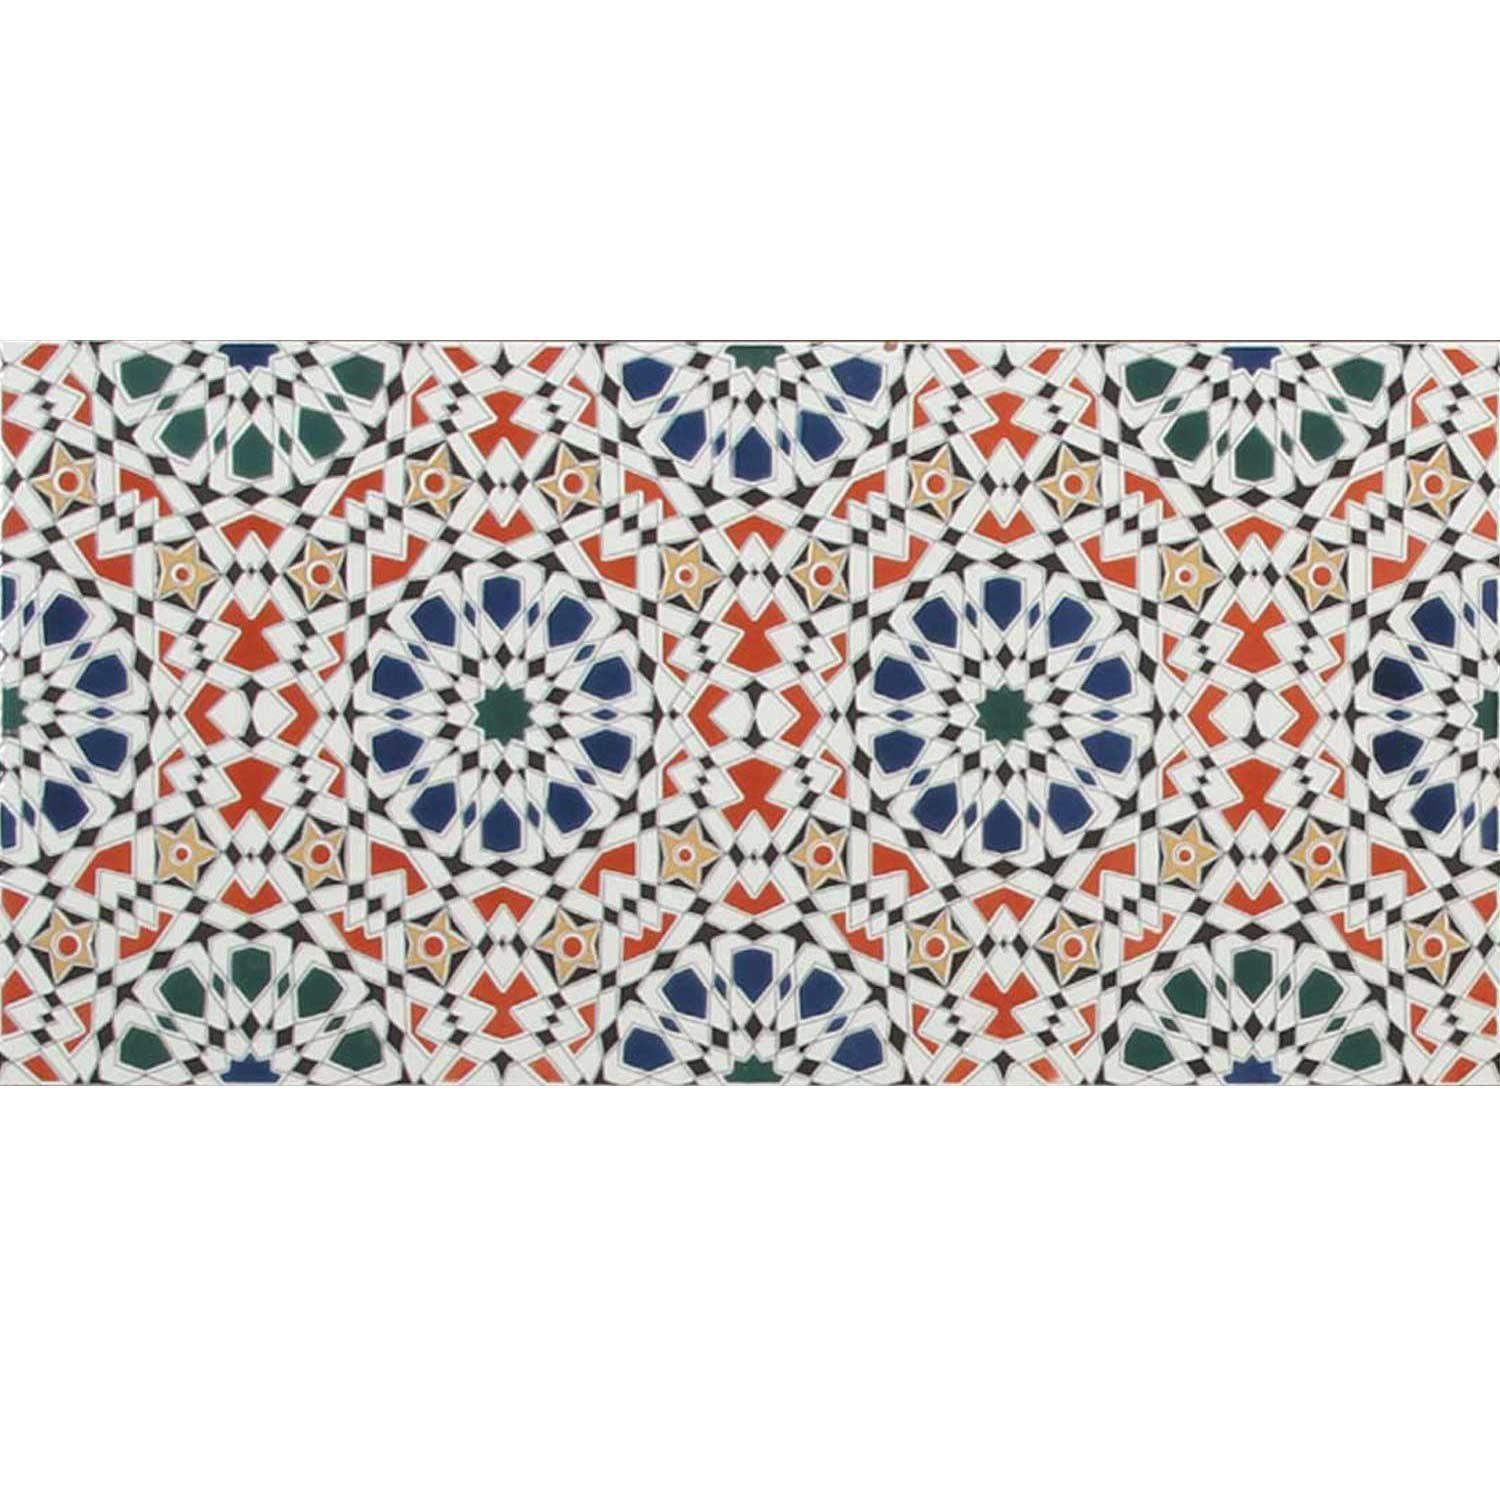 Casa Moro Wandfliese Marokkanische mit Endlos bunt Fliesen 50x25 Mosaik-Muster, Liman cm 1 Muster qm